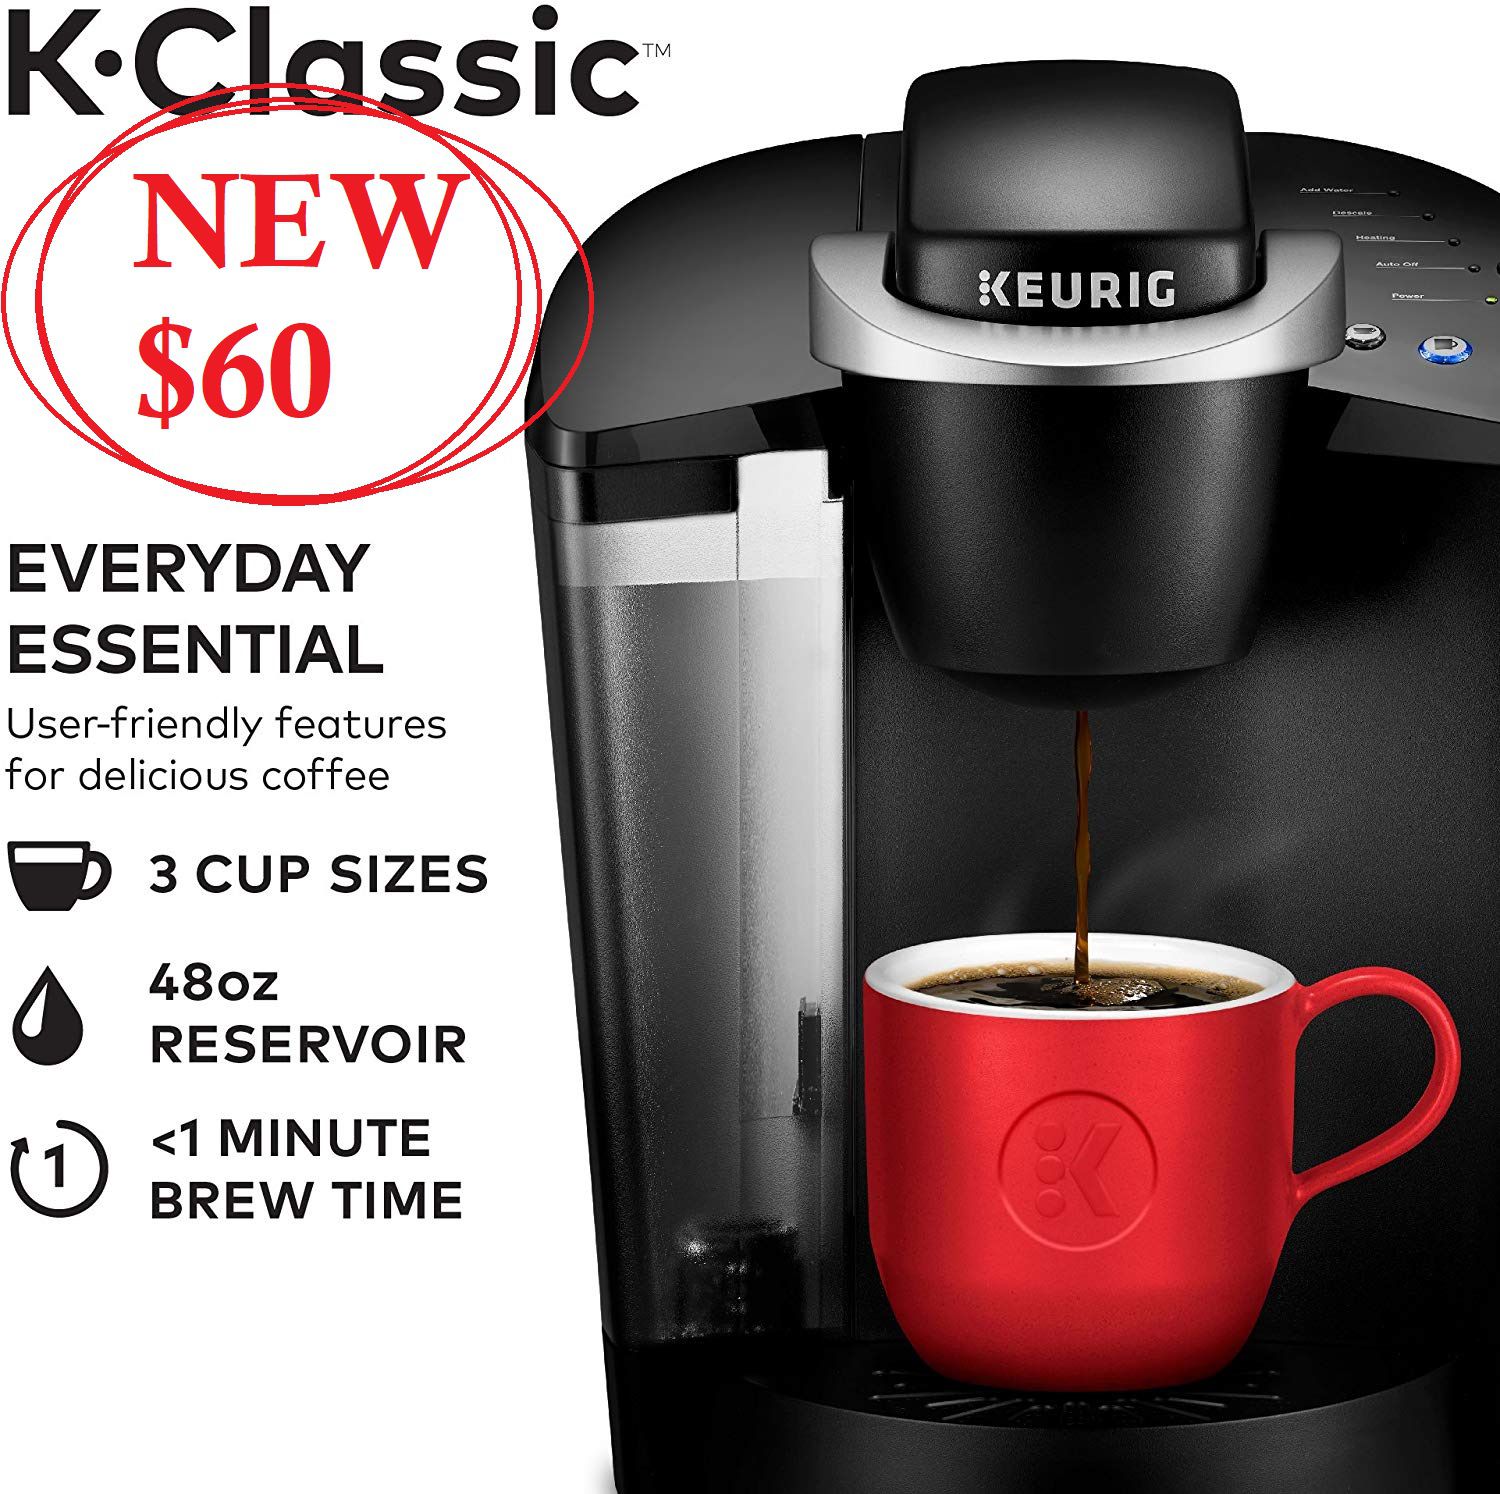 BRAND NEW Keurig K-Classic K55 Coffee maker coffeemaker- BOX NEVER OPENED - Great CHRISTMAS GIFT